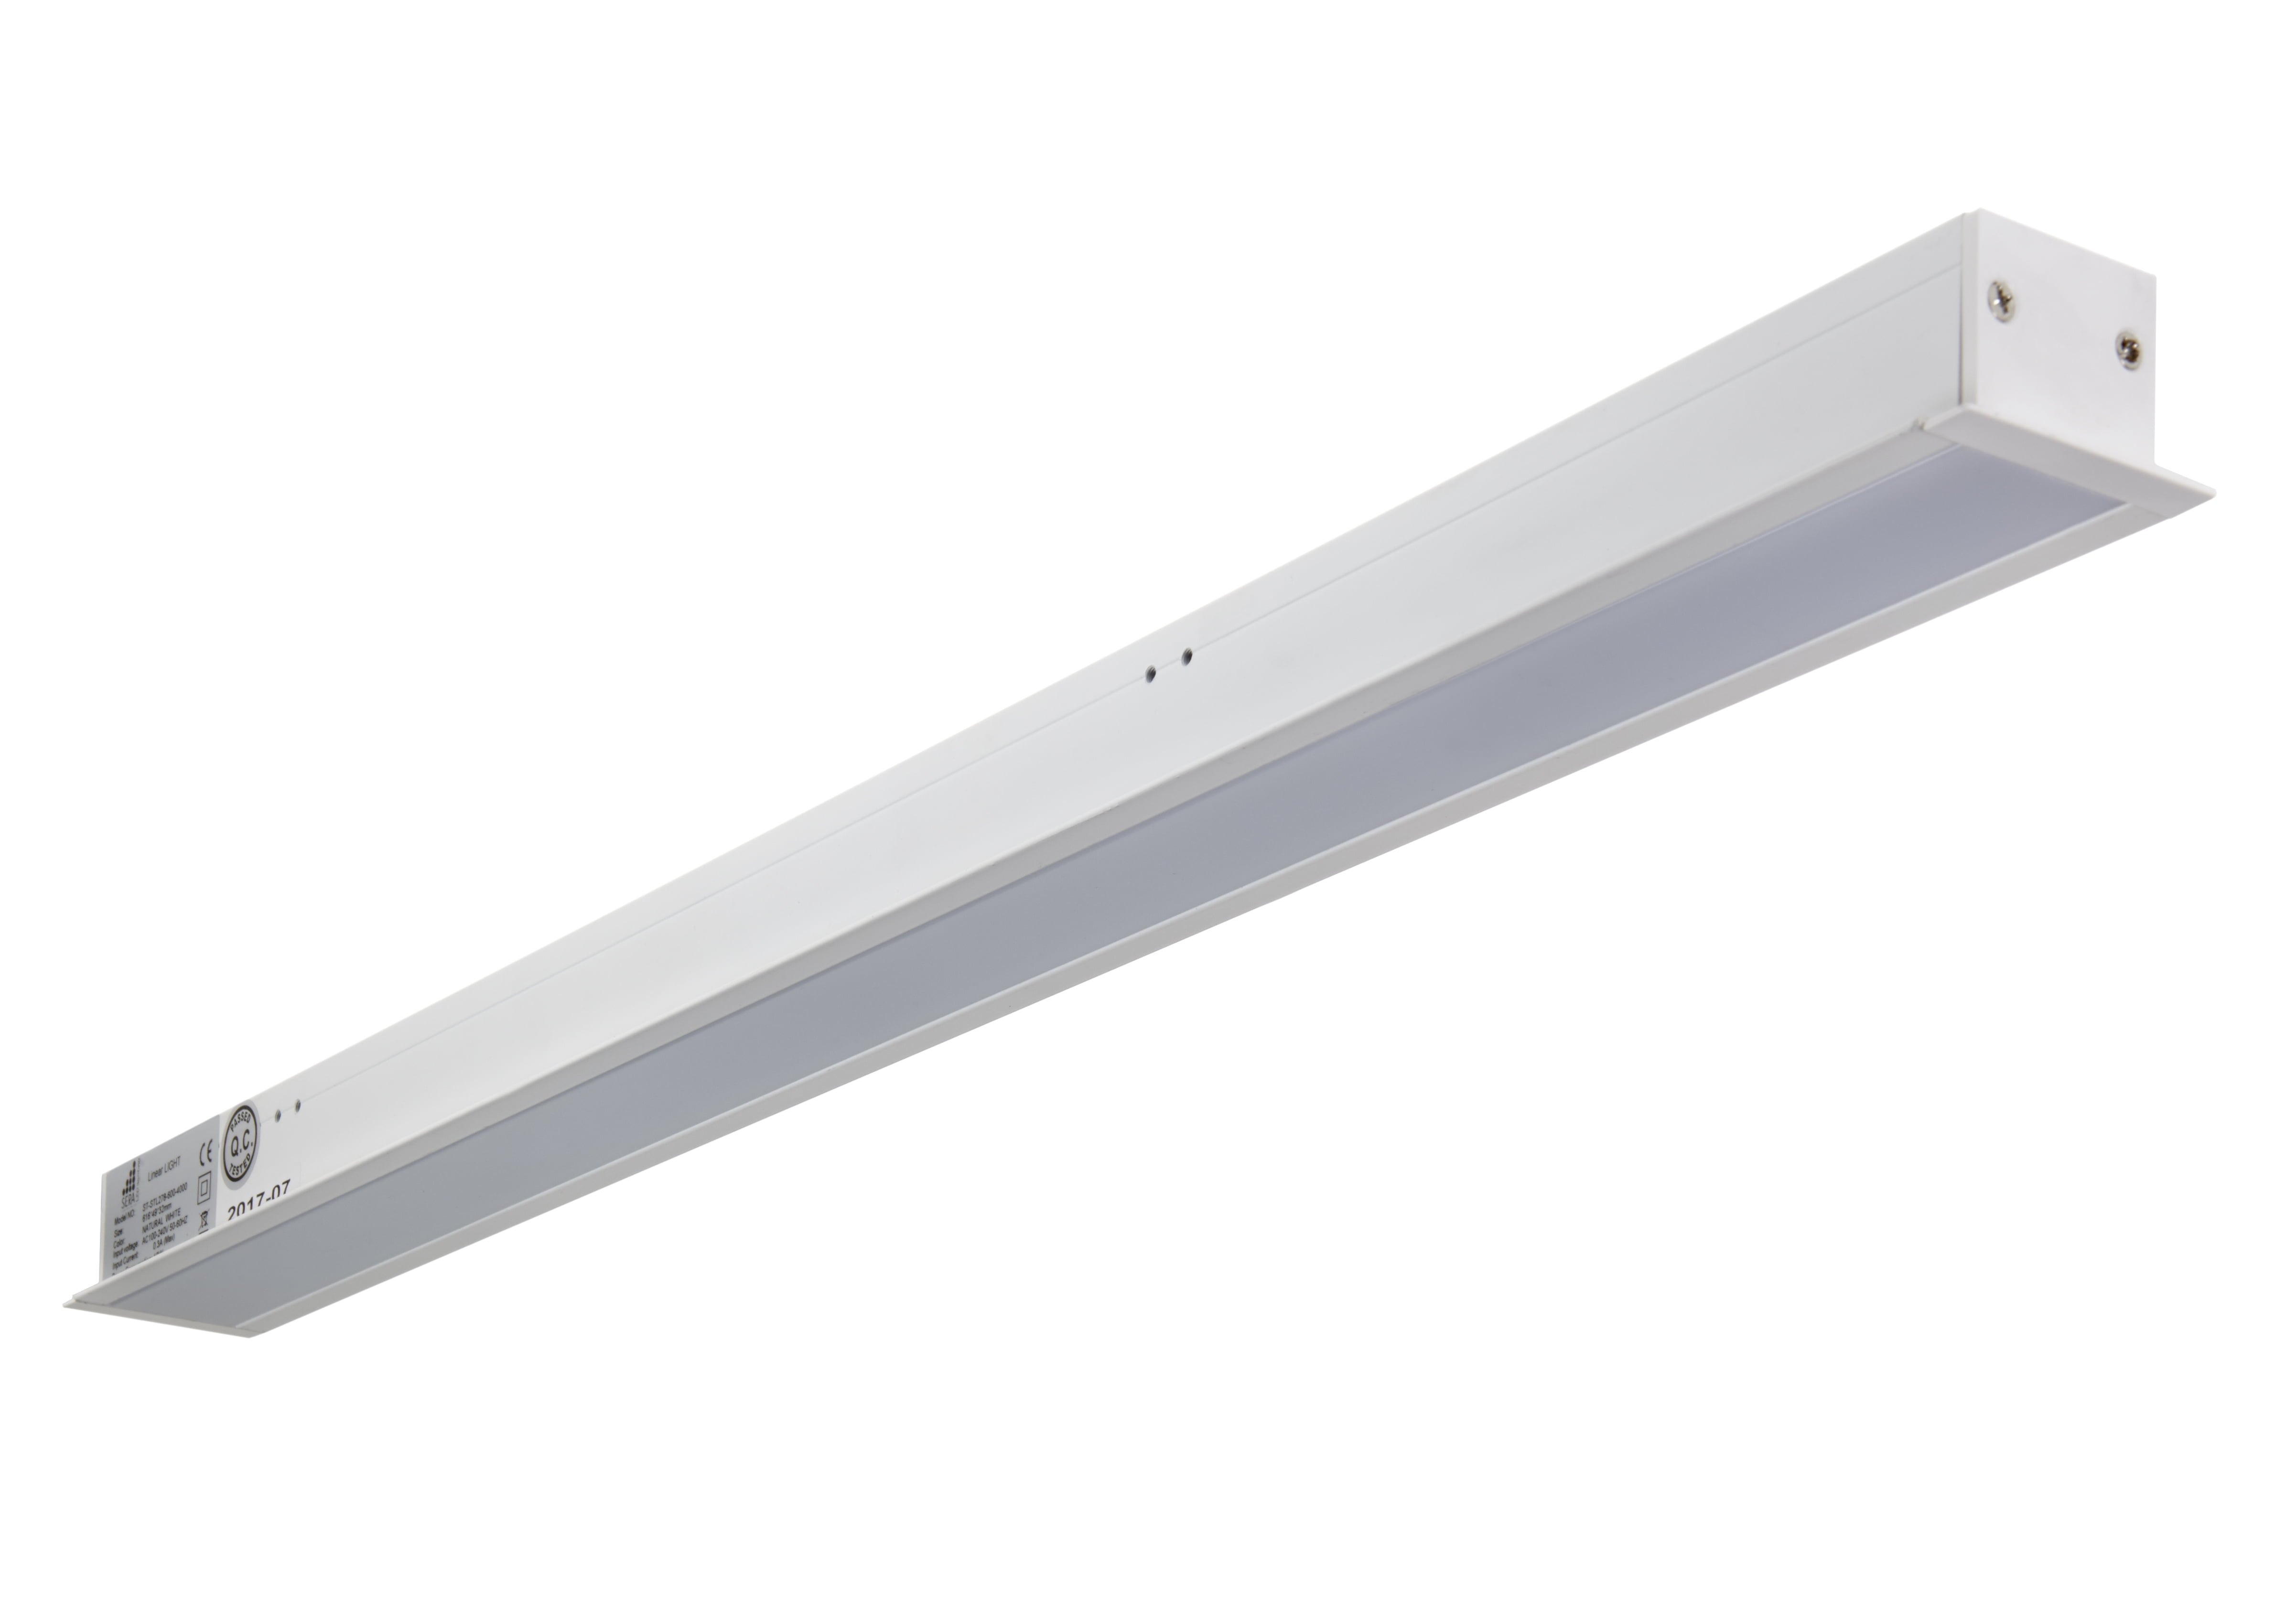 Recessed Linear Led Lighting Stl278, Recessed Linear Lighting Ip65